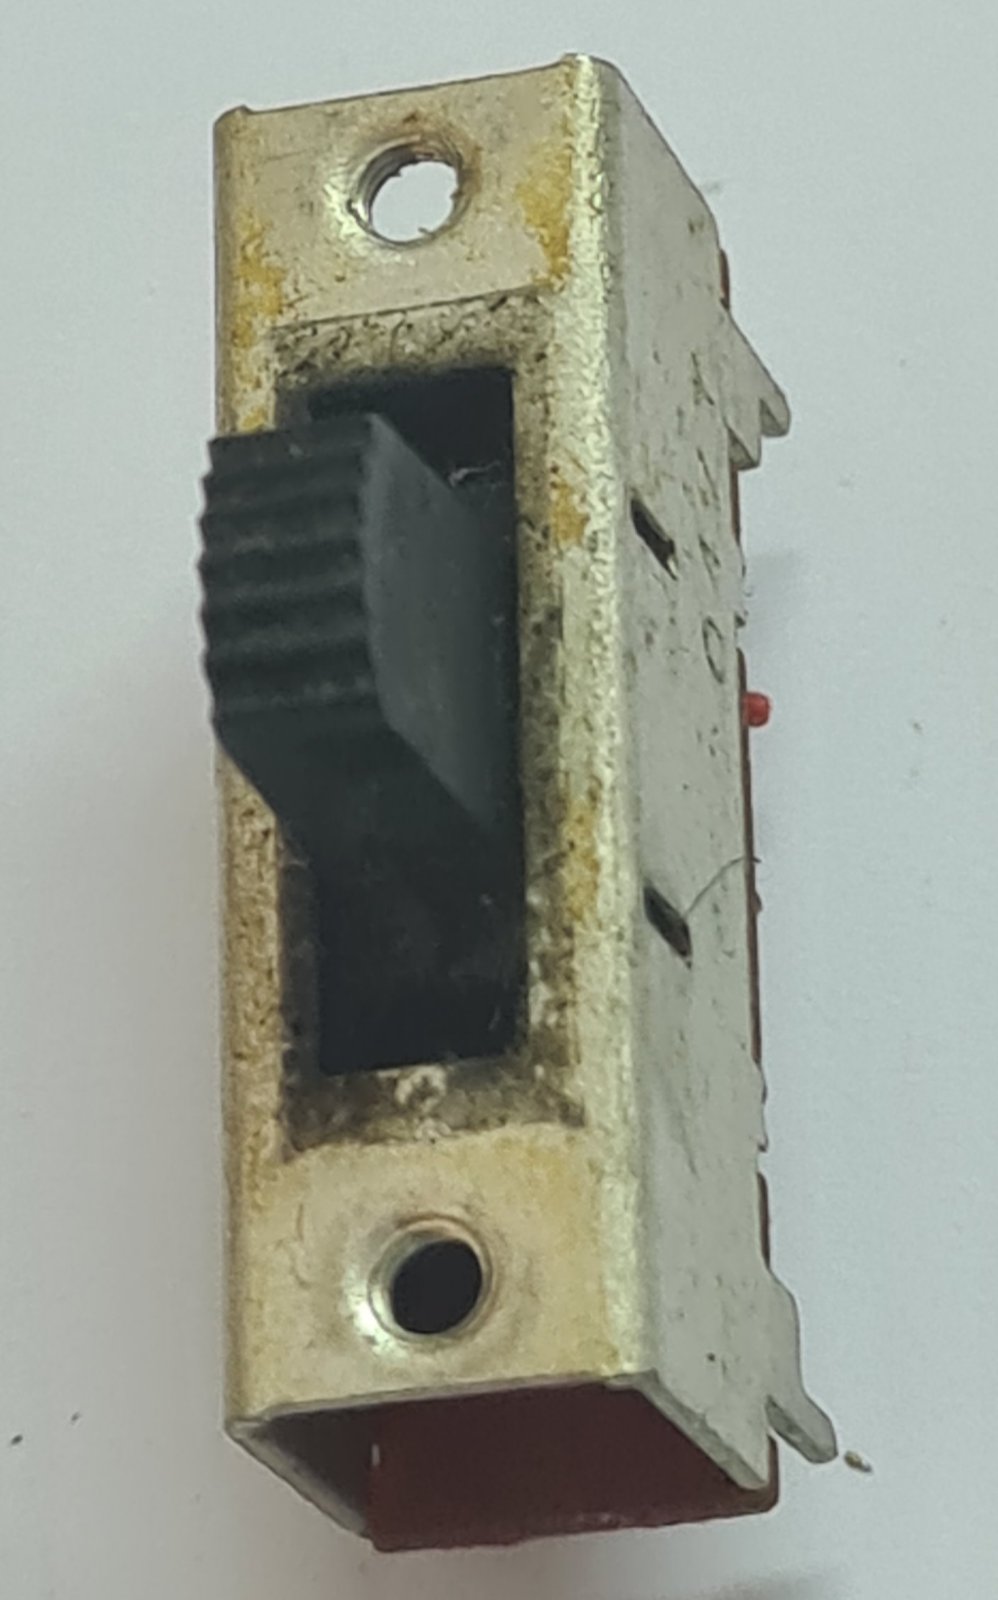 Teac Series 3 mixer  8 pin slide switch